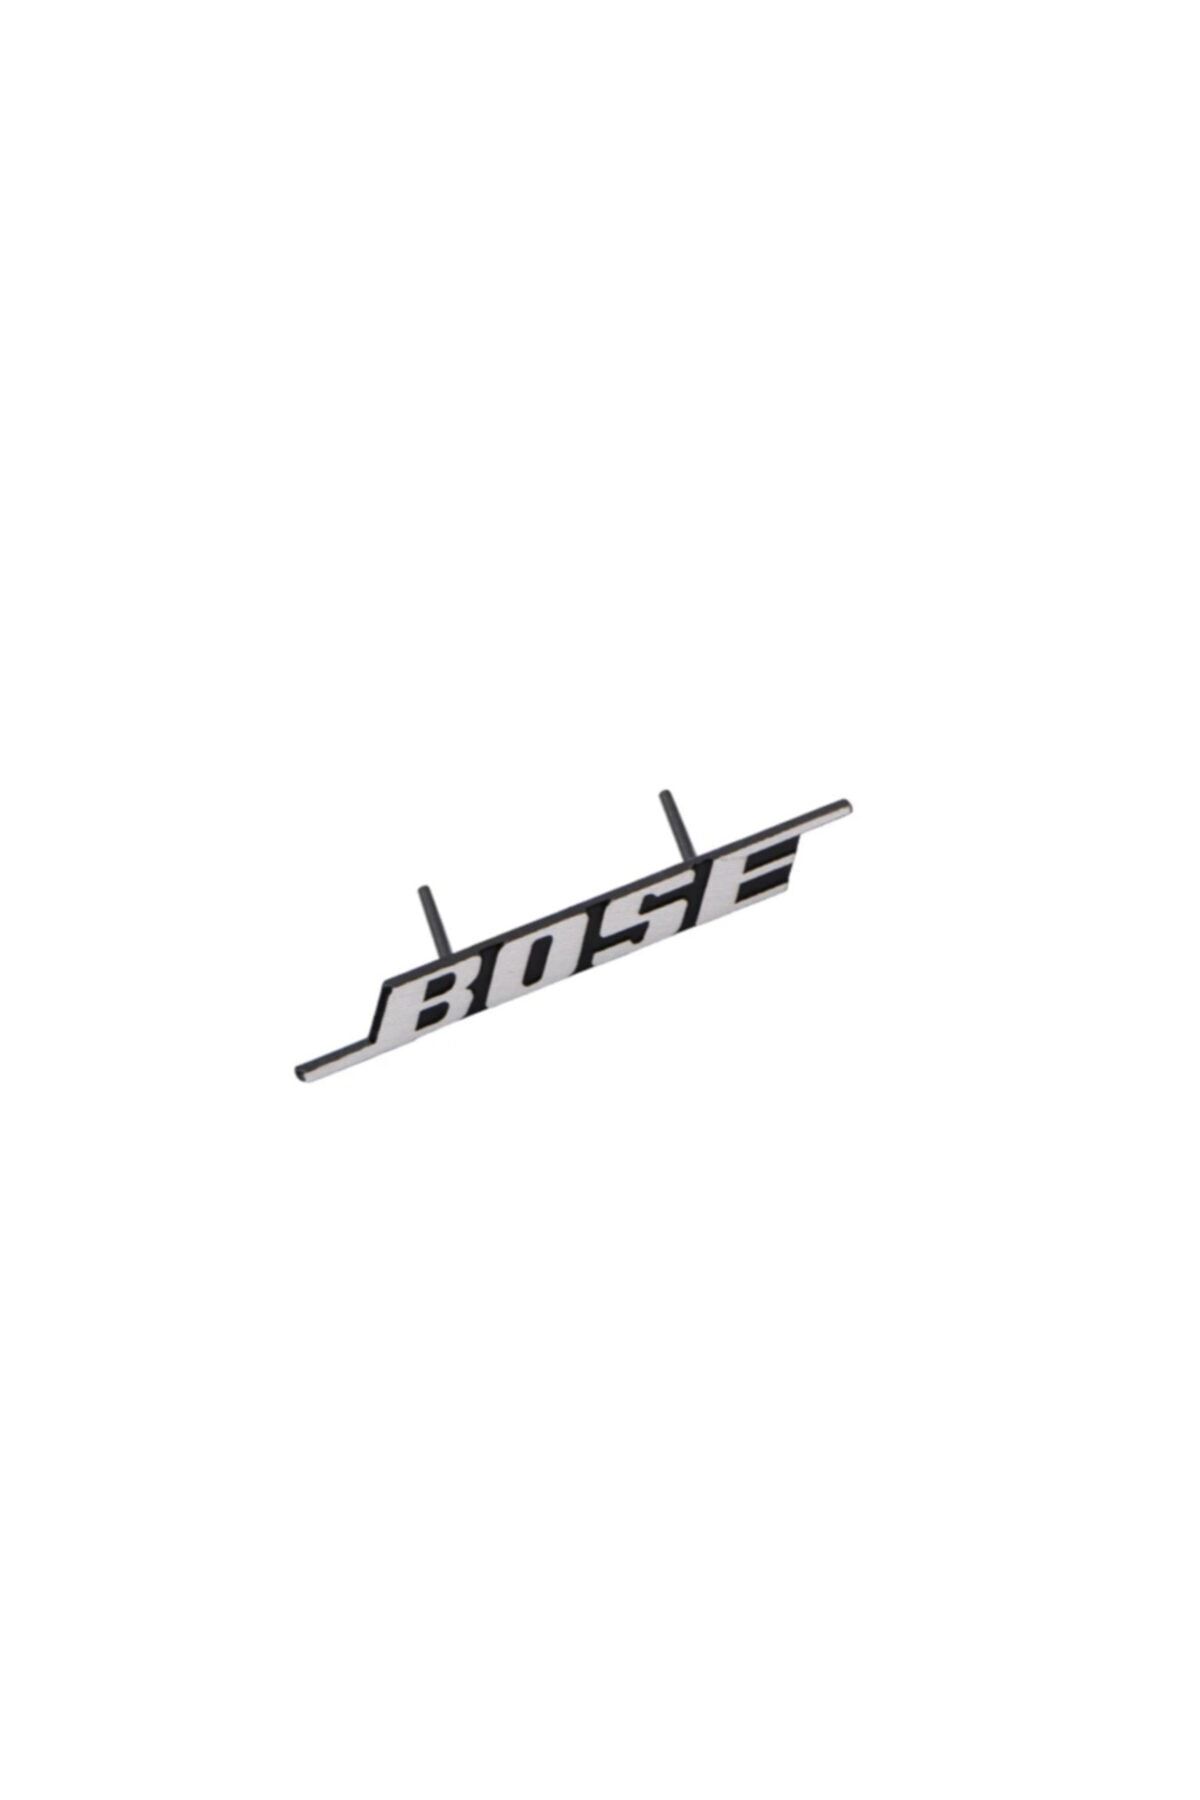 Mercedes Bose Hoparlor Yapıştırma /logo/sticker Set 4cm (2 ADET)